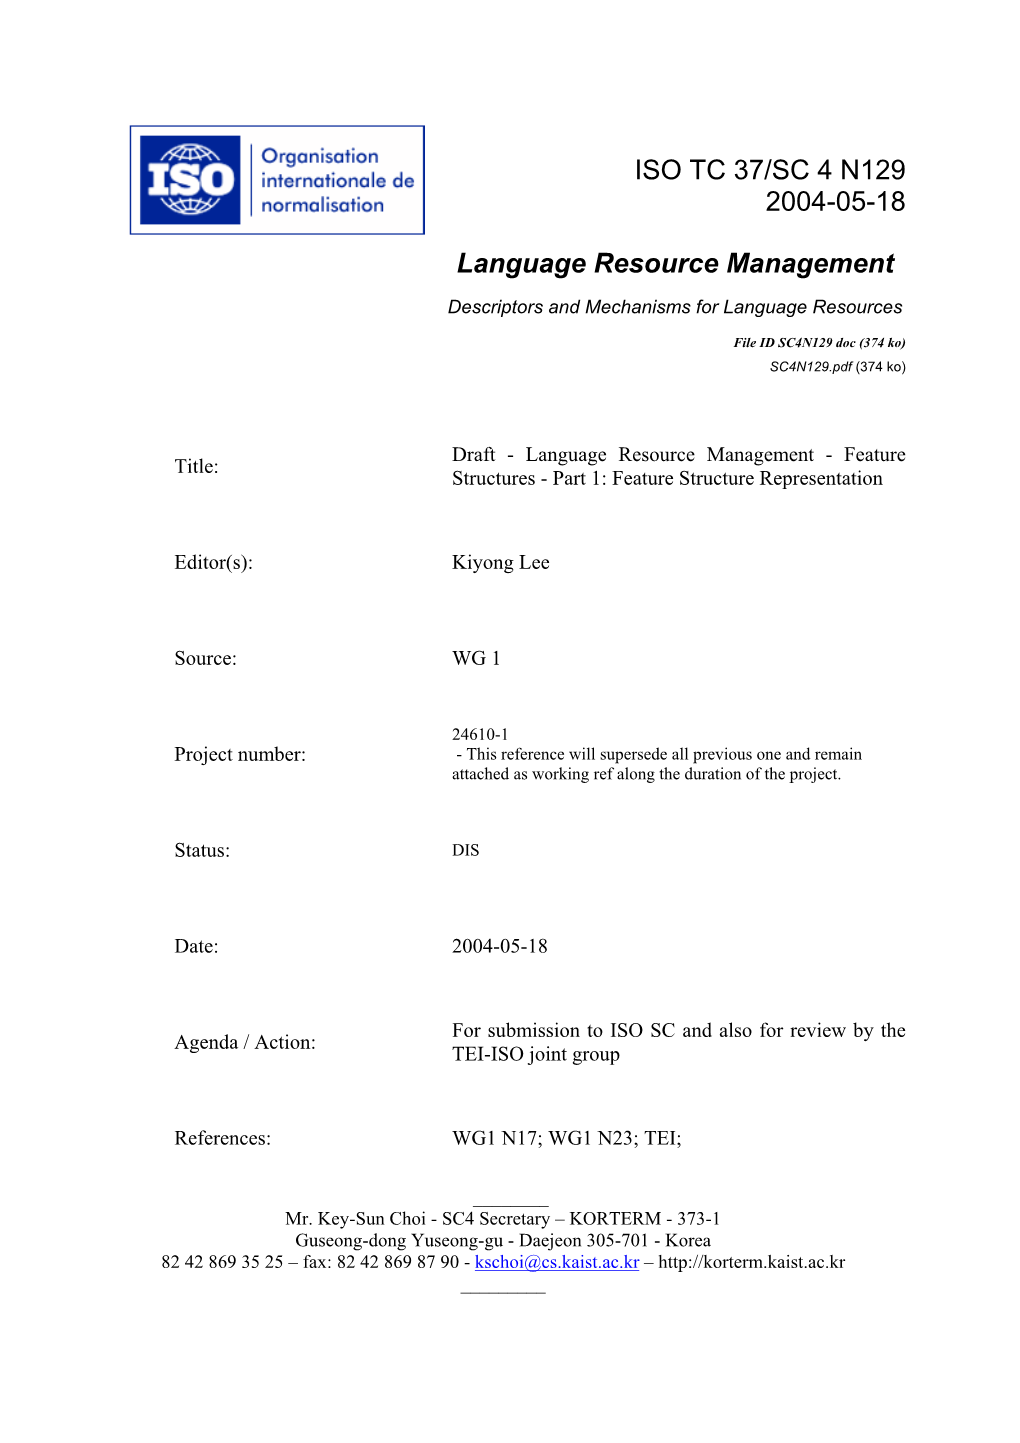 ISO TC 37/SC 4 N129 2004-05-18 Language Resource Management